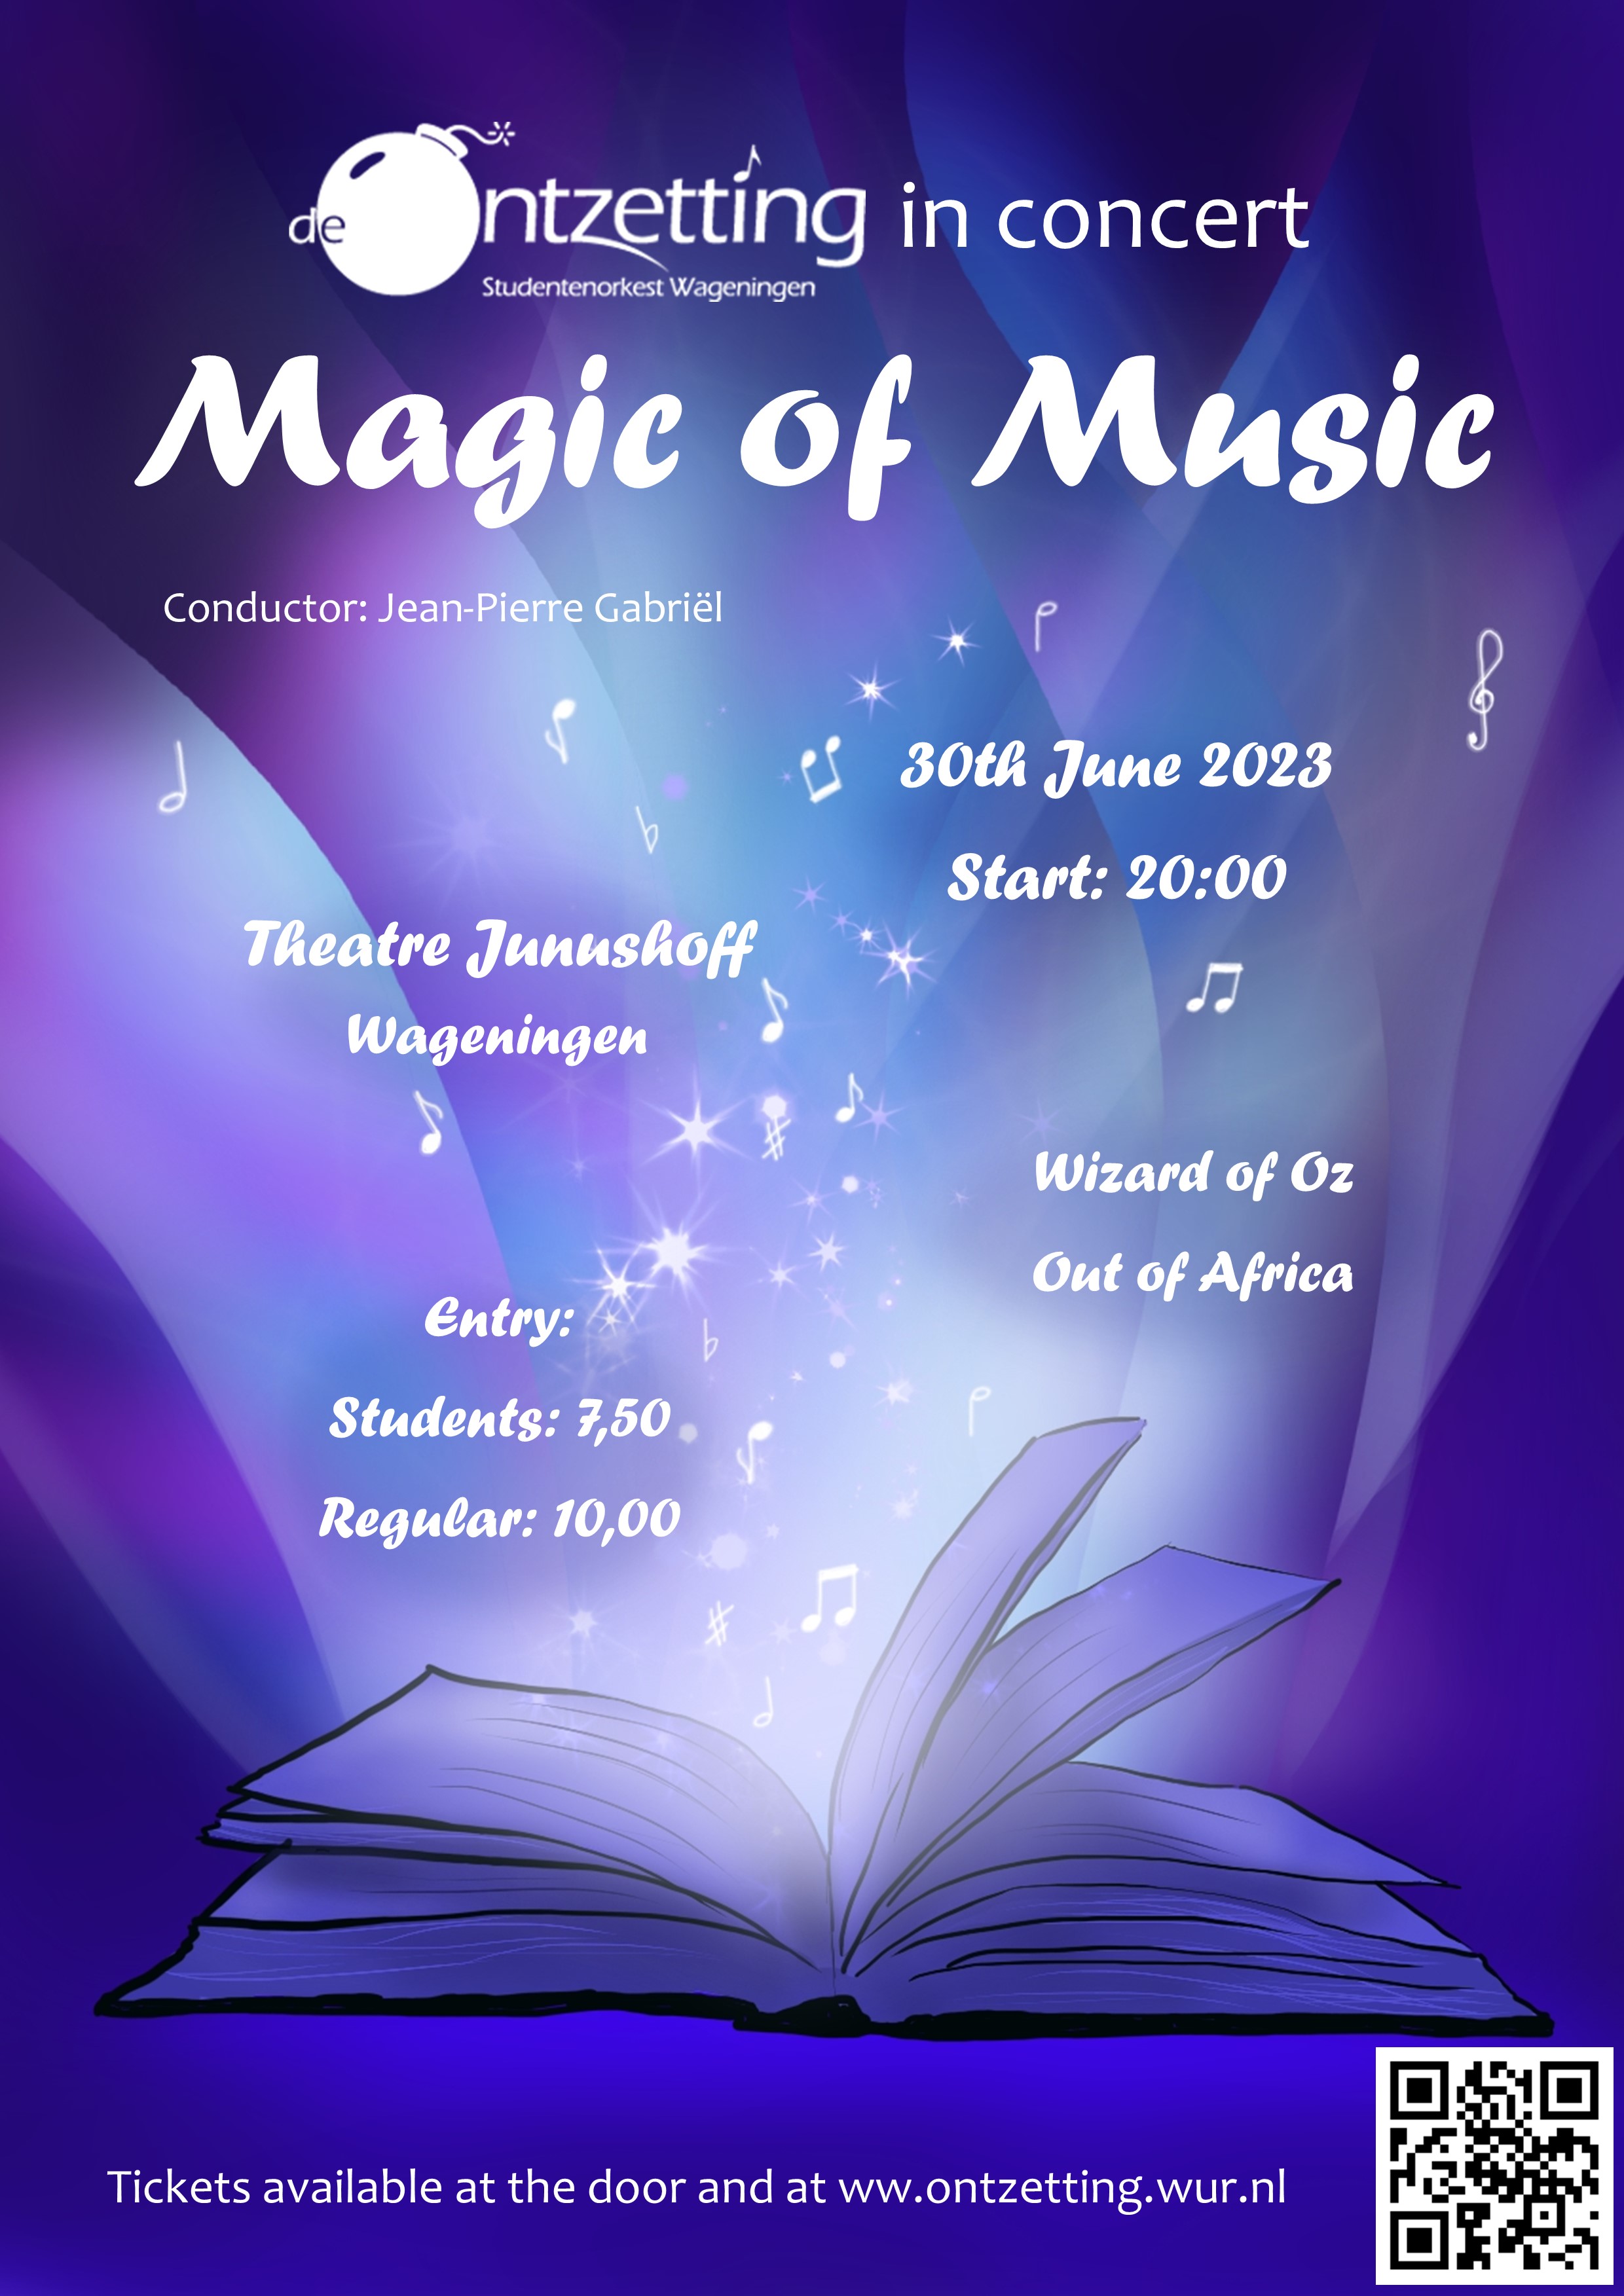 Concert Magic of Music Wageningen